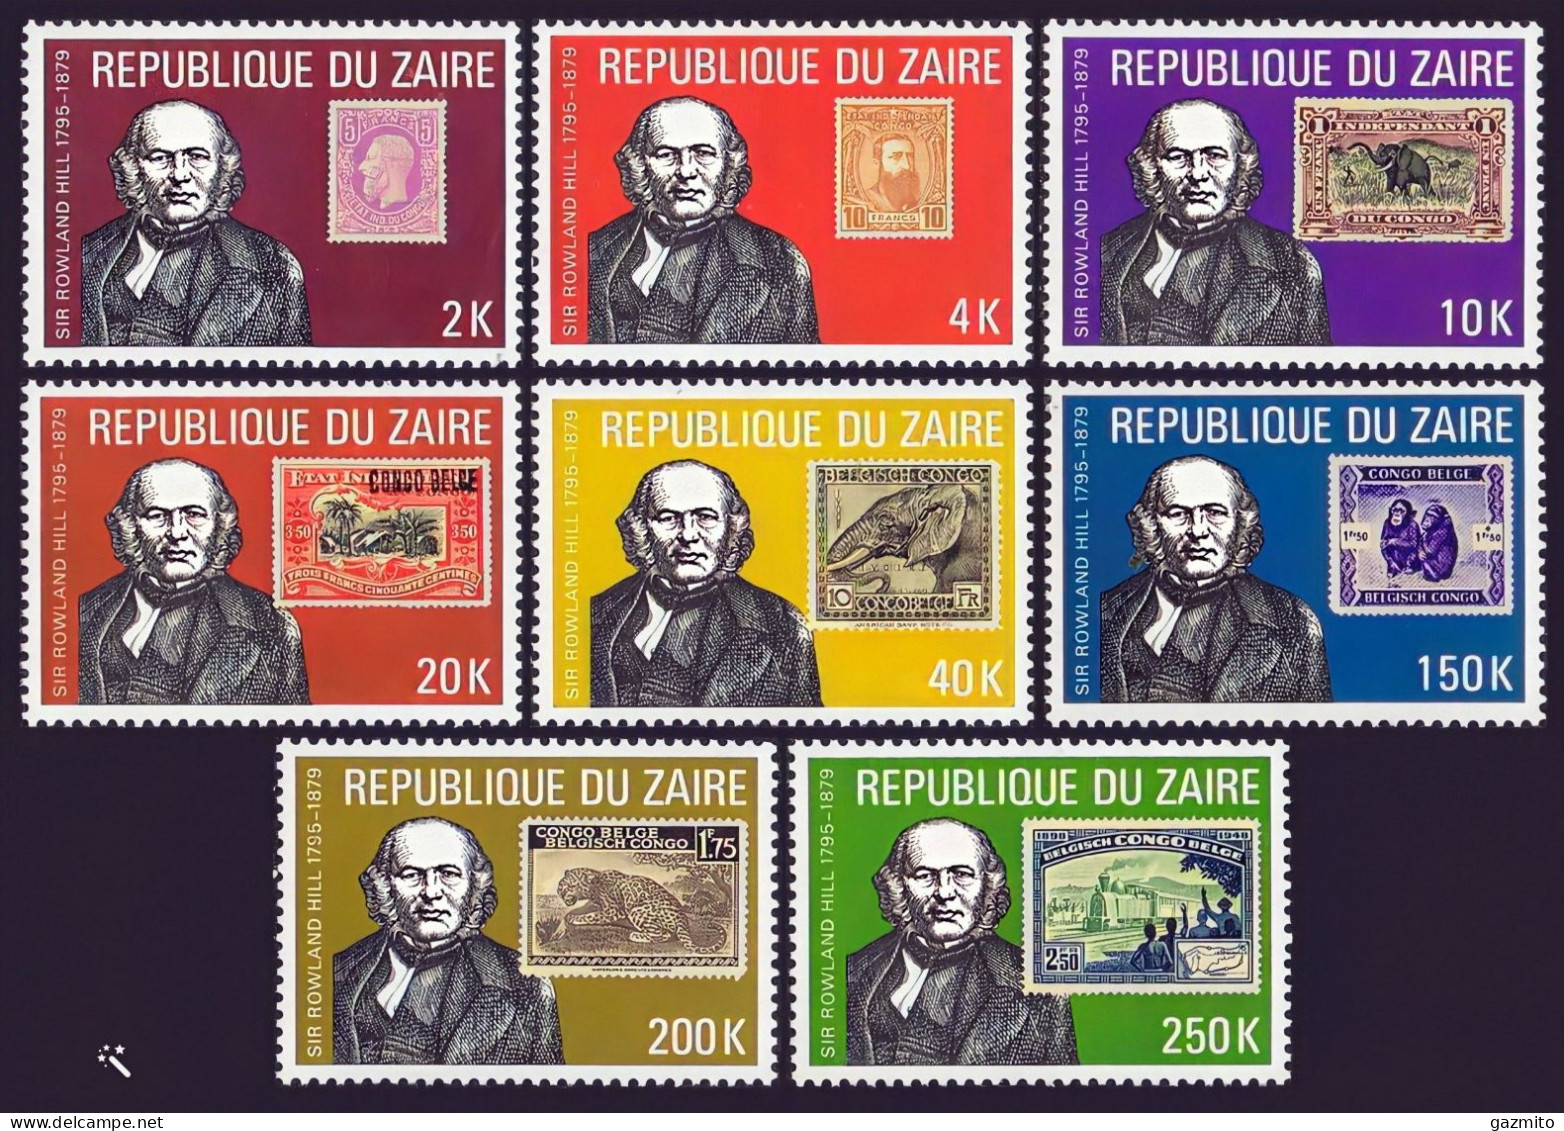 Zaire 1980, Rowland Hill, Stamp On Stamp, Wild Cat, Monkey, Elephant, 8val - Elefantes